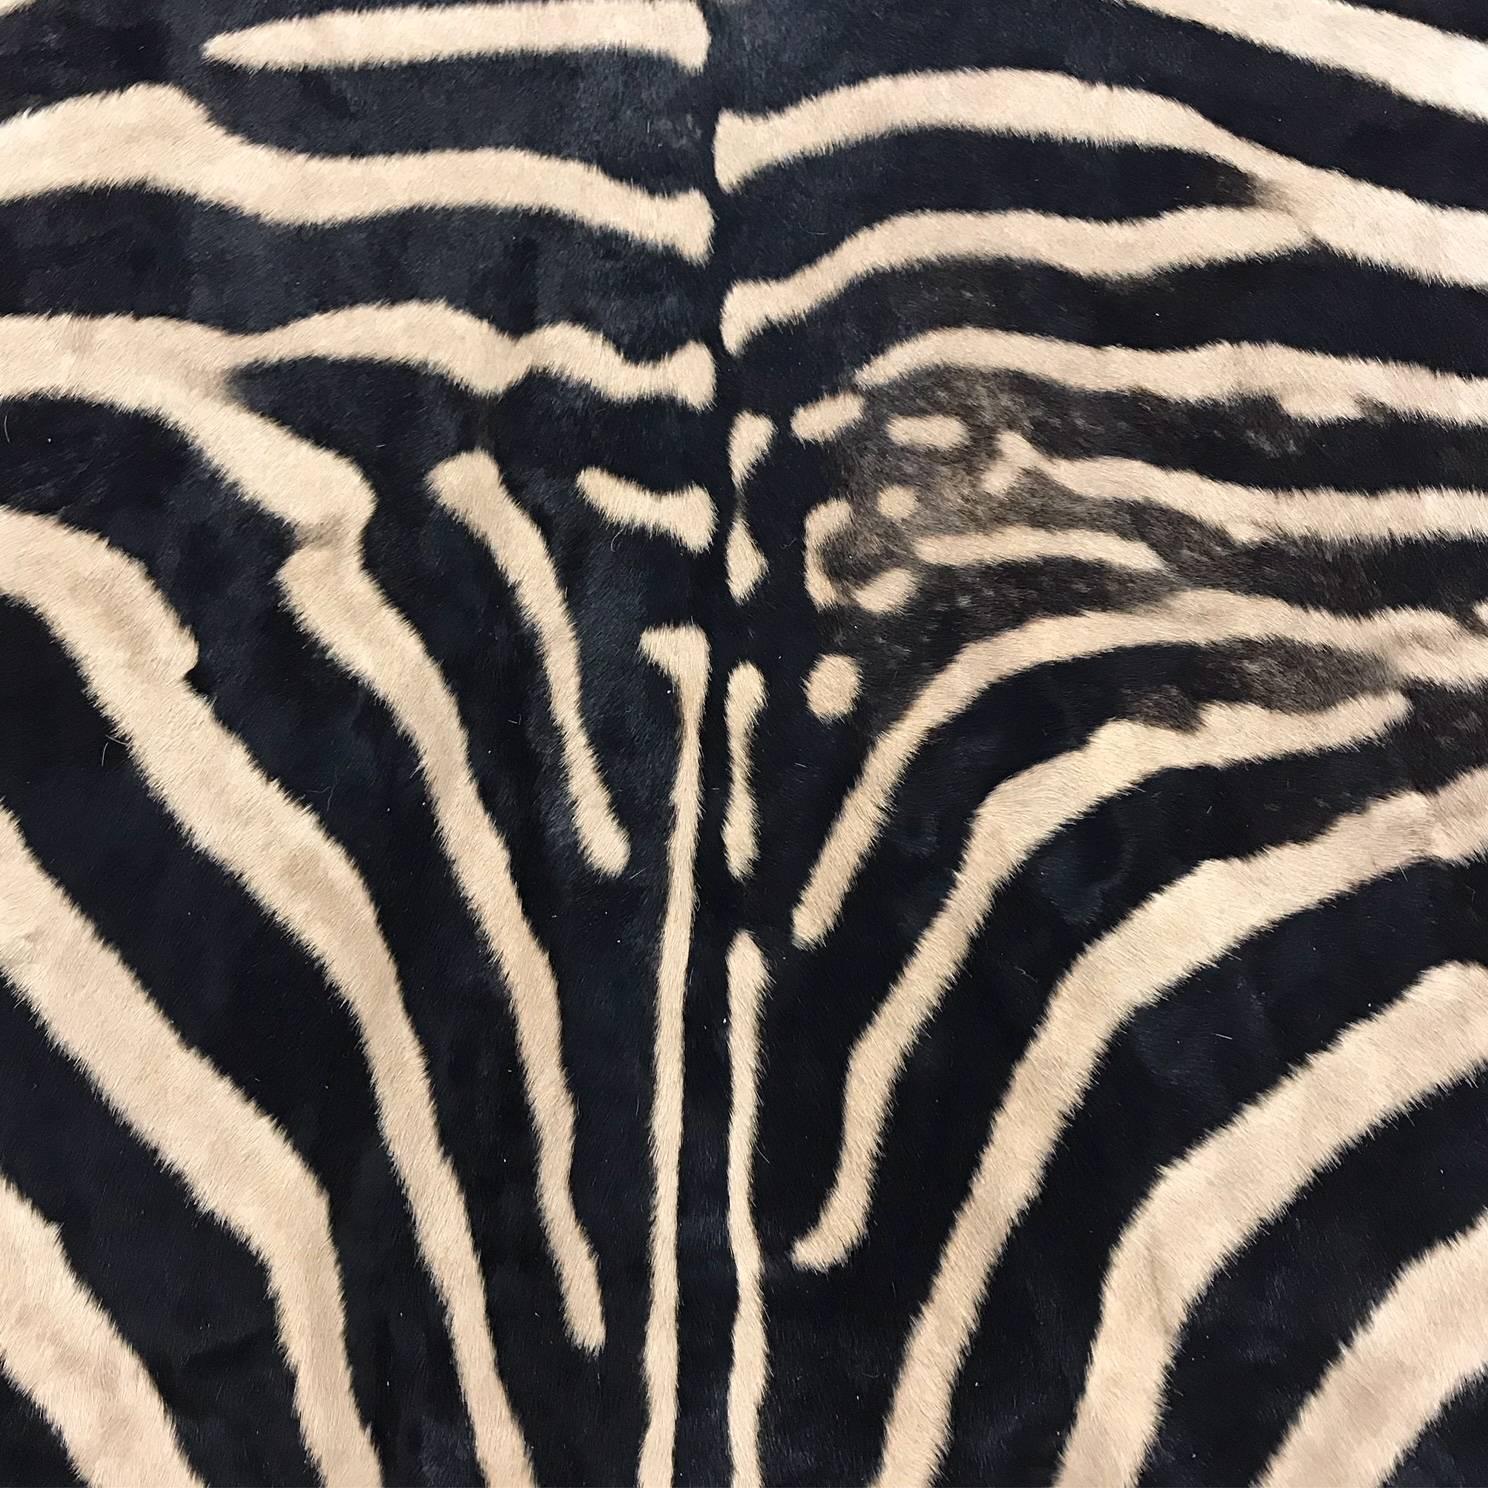 Contemporary Authentic Zebra Hide Rug